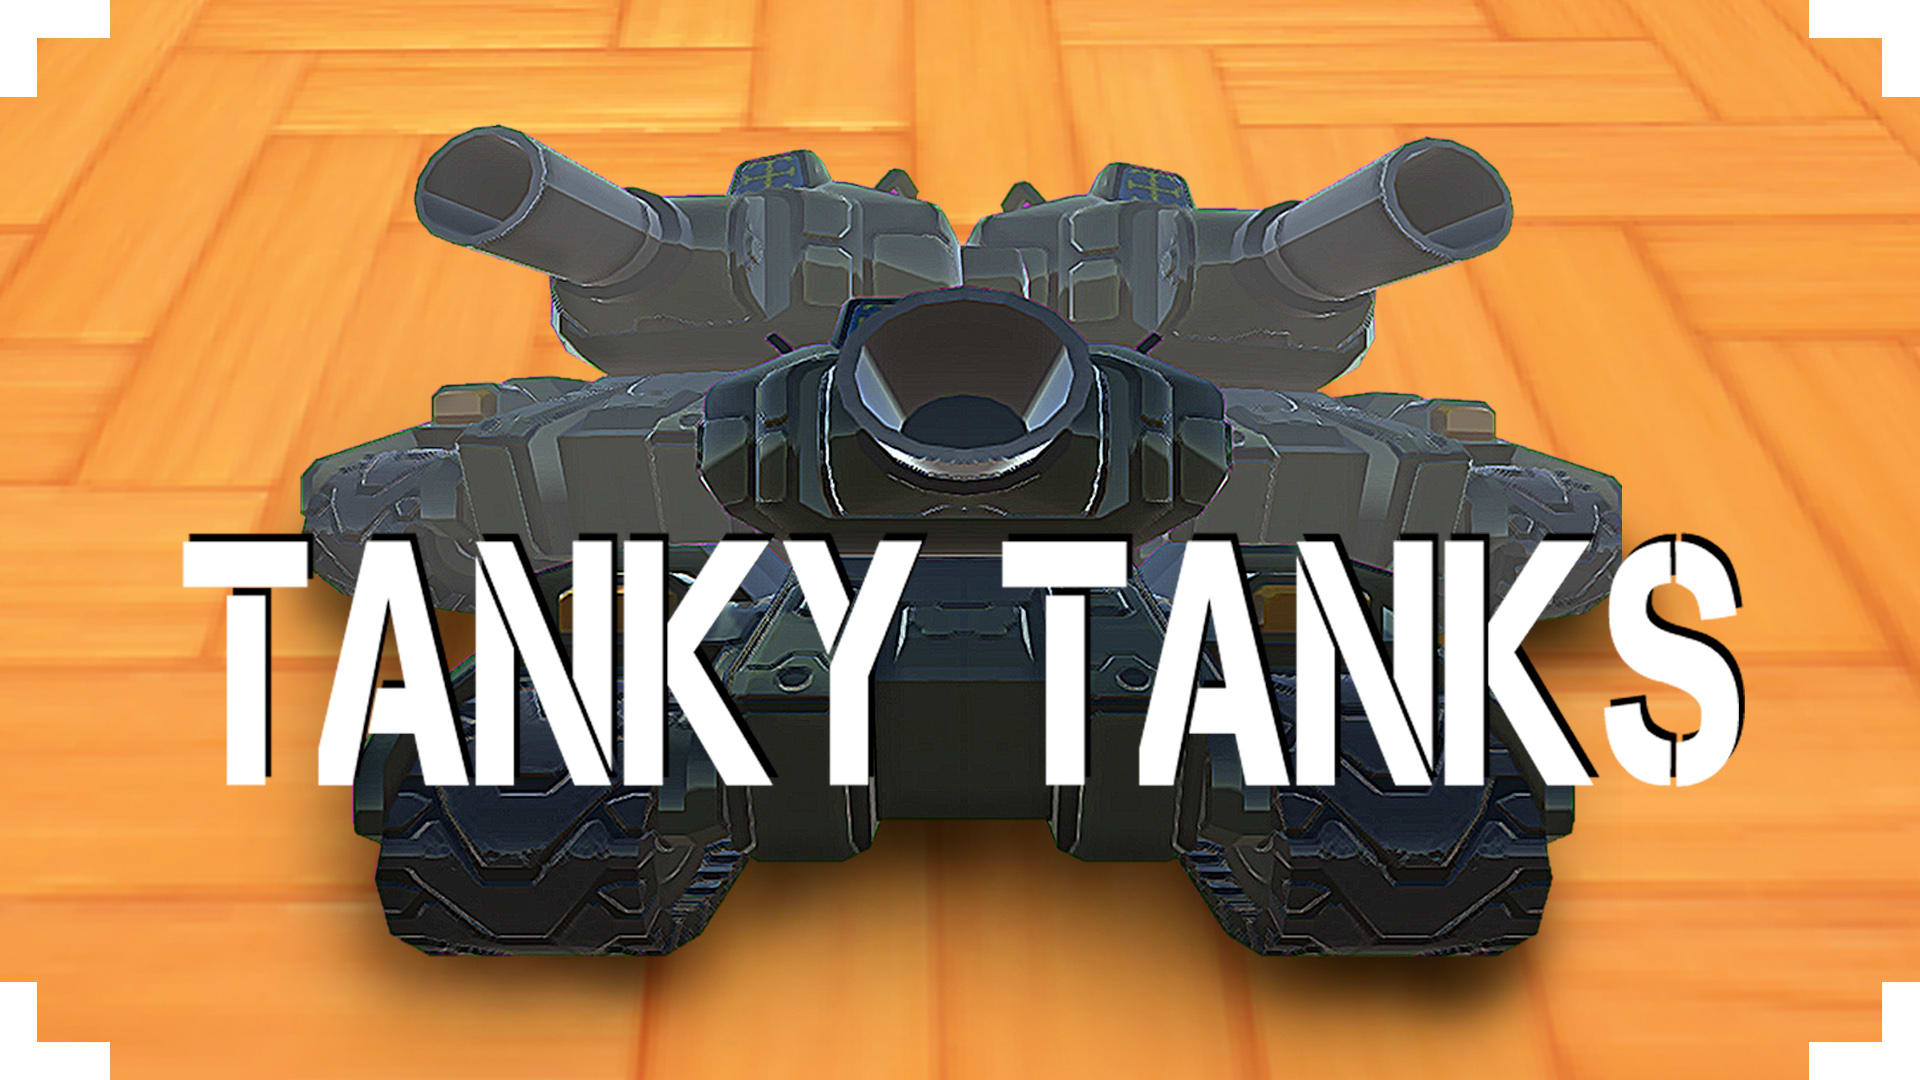 Tanky Tanks